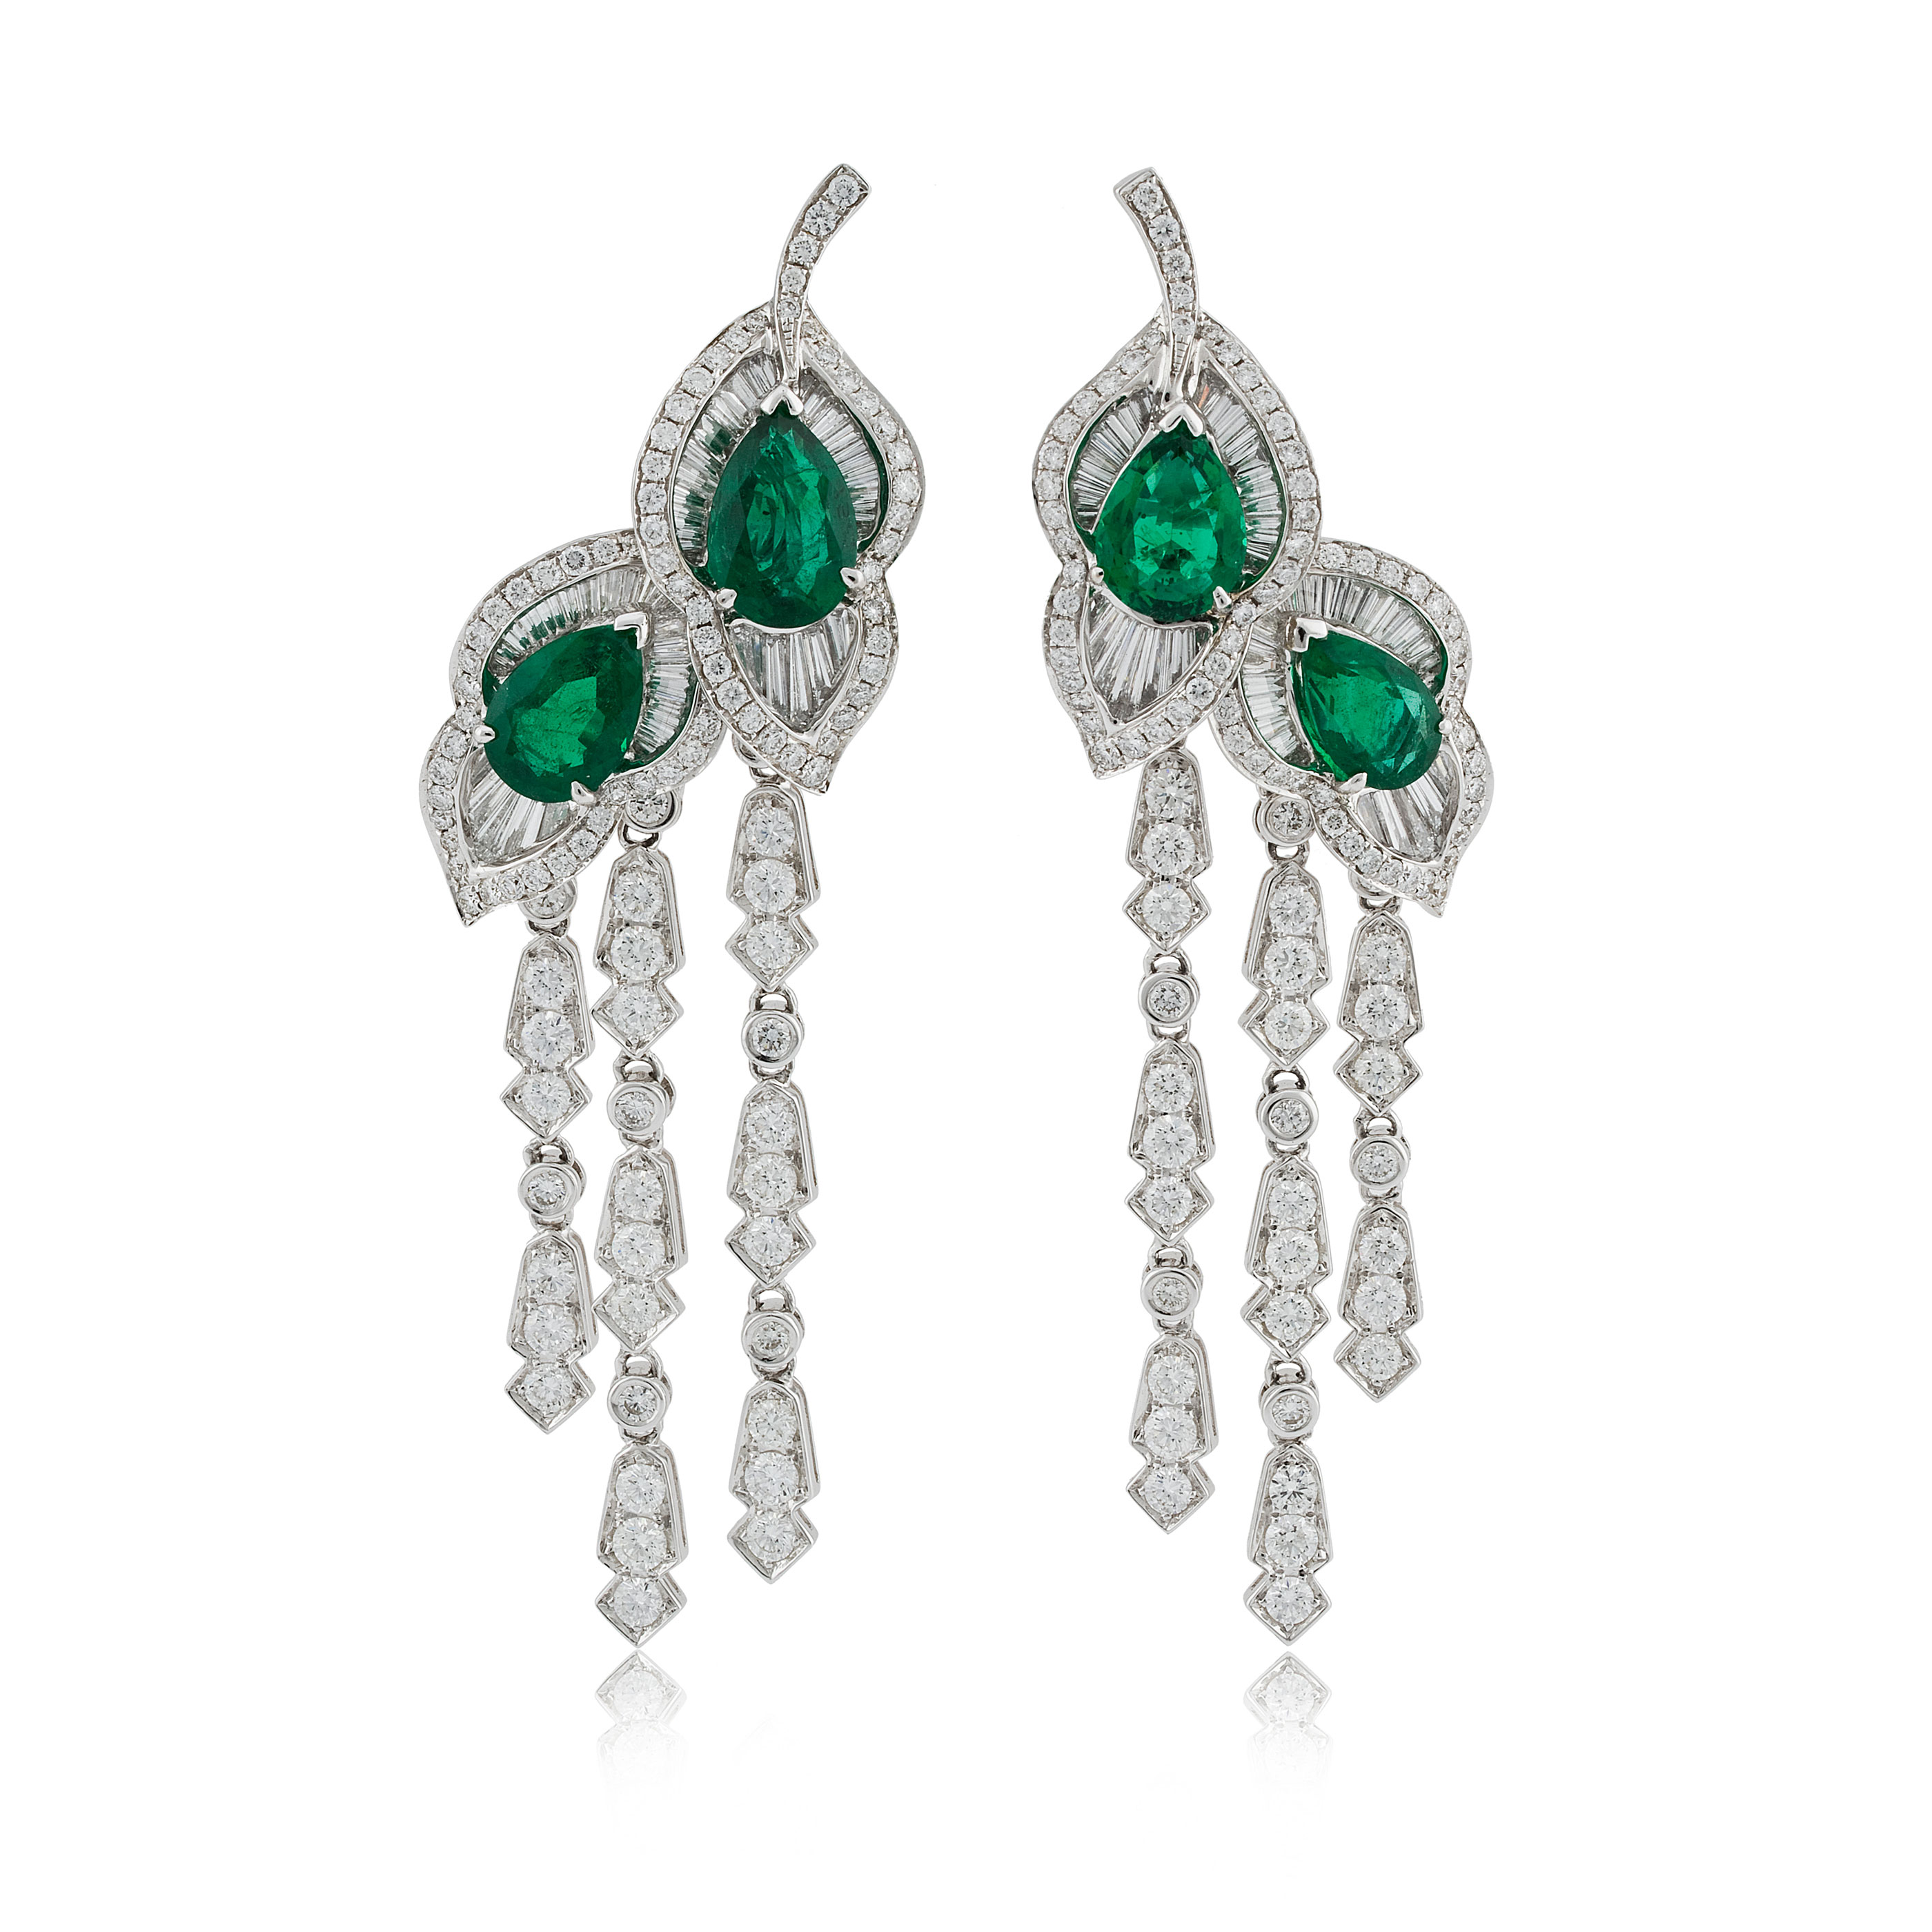 An Exhibition of Colombian and Zambian Emerald Jewellery | Saffronart.com